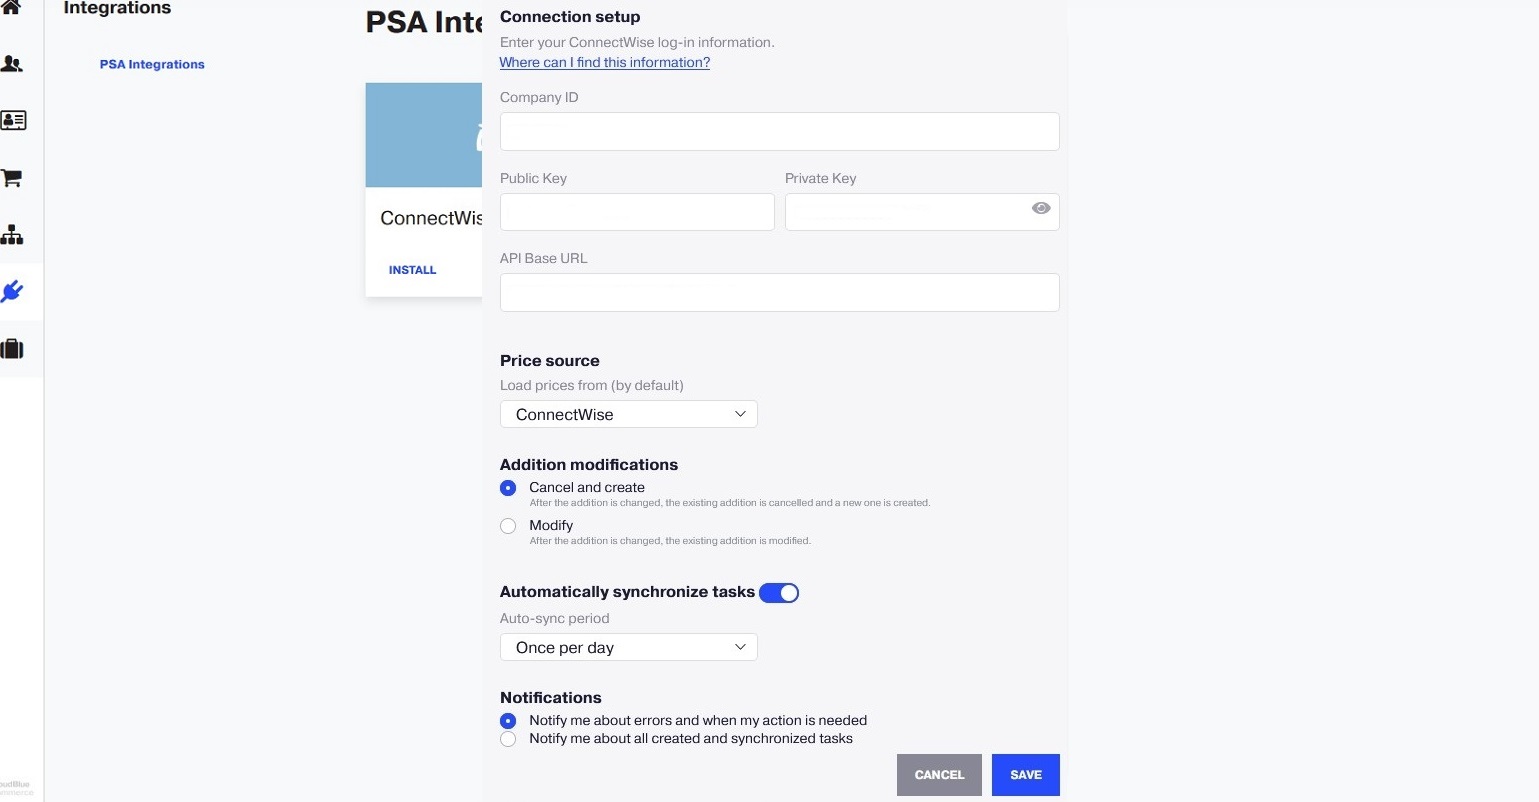 Configuring ConnectWise PSA Integration